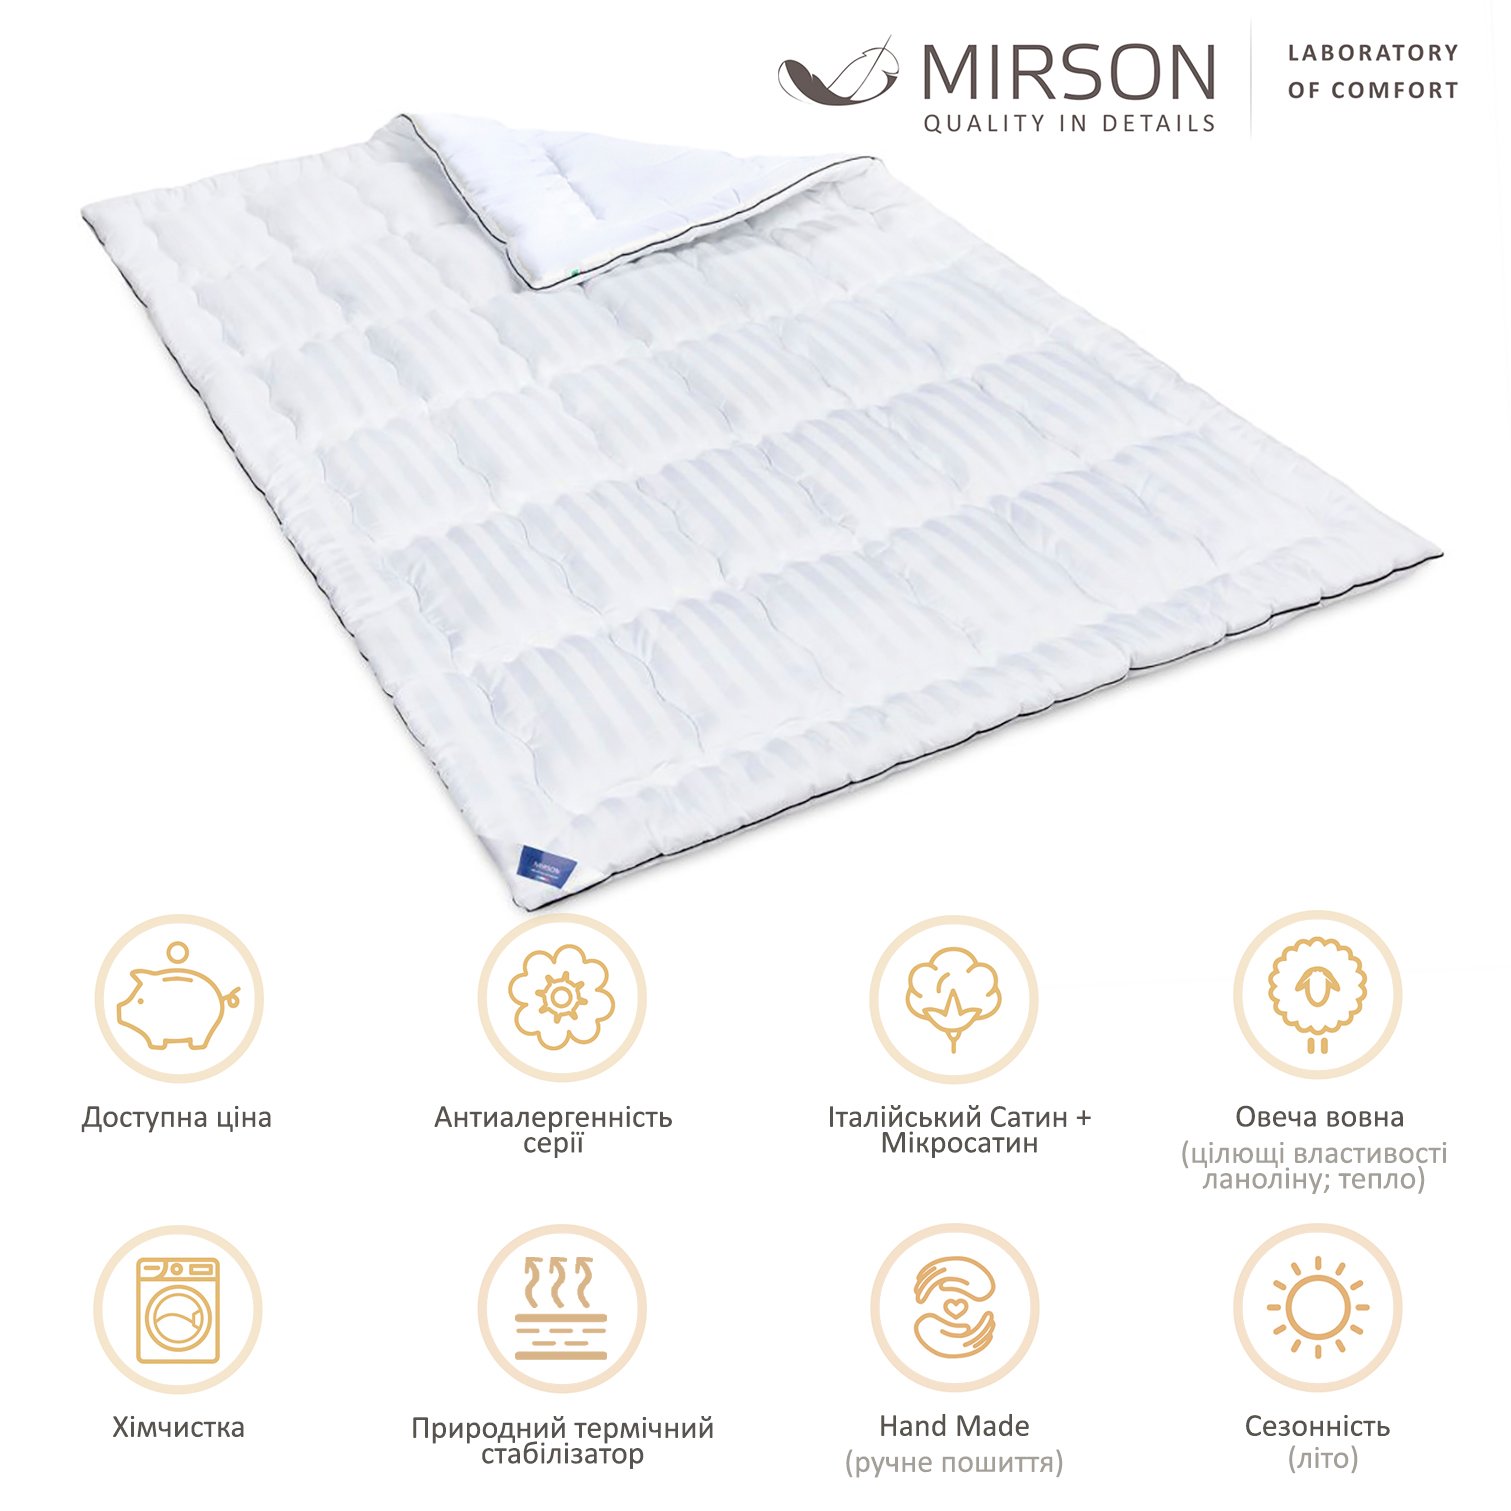 Одеяло шерстяное MirSon Royal Pearl Hand Made №1360, летнее, 140x205 см, белое - фото 5